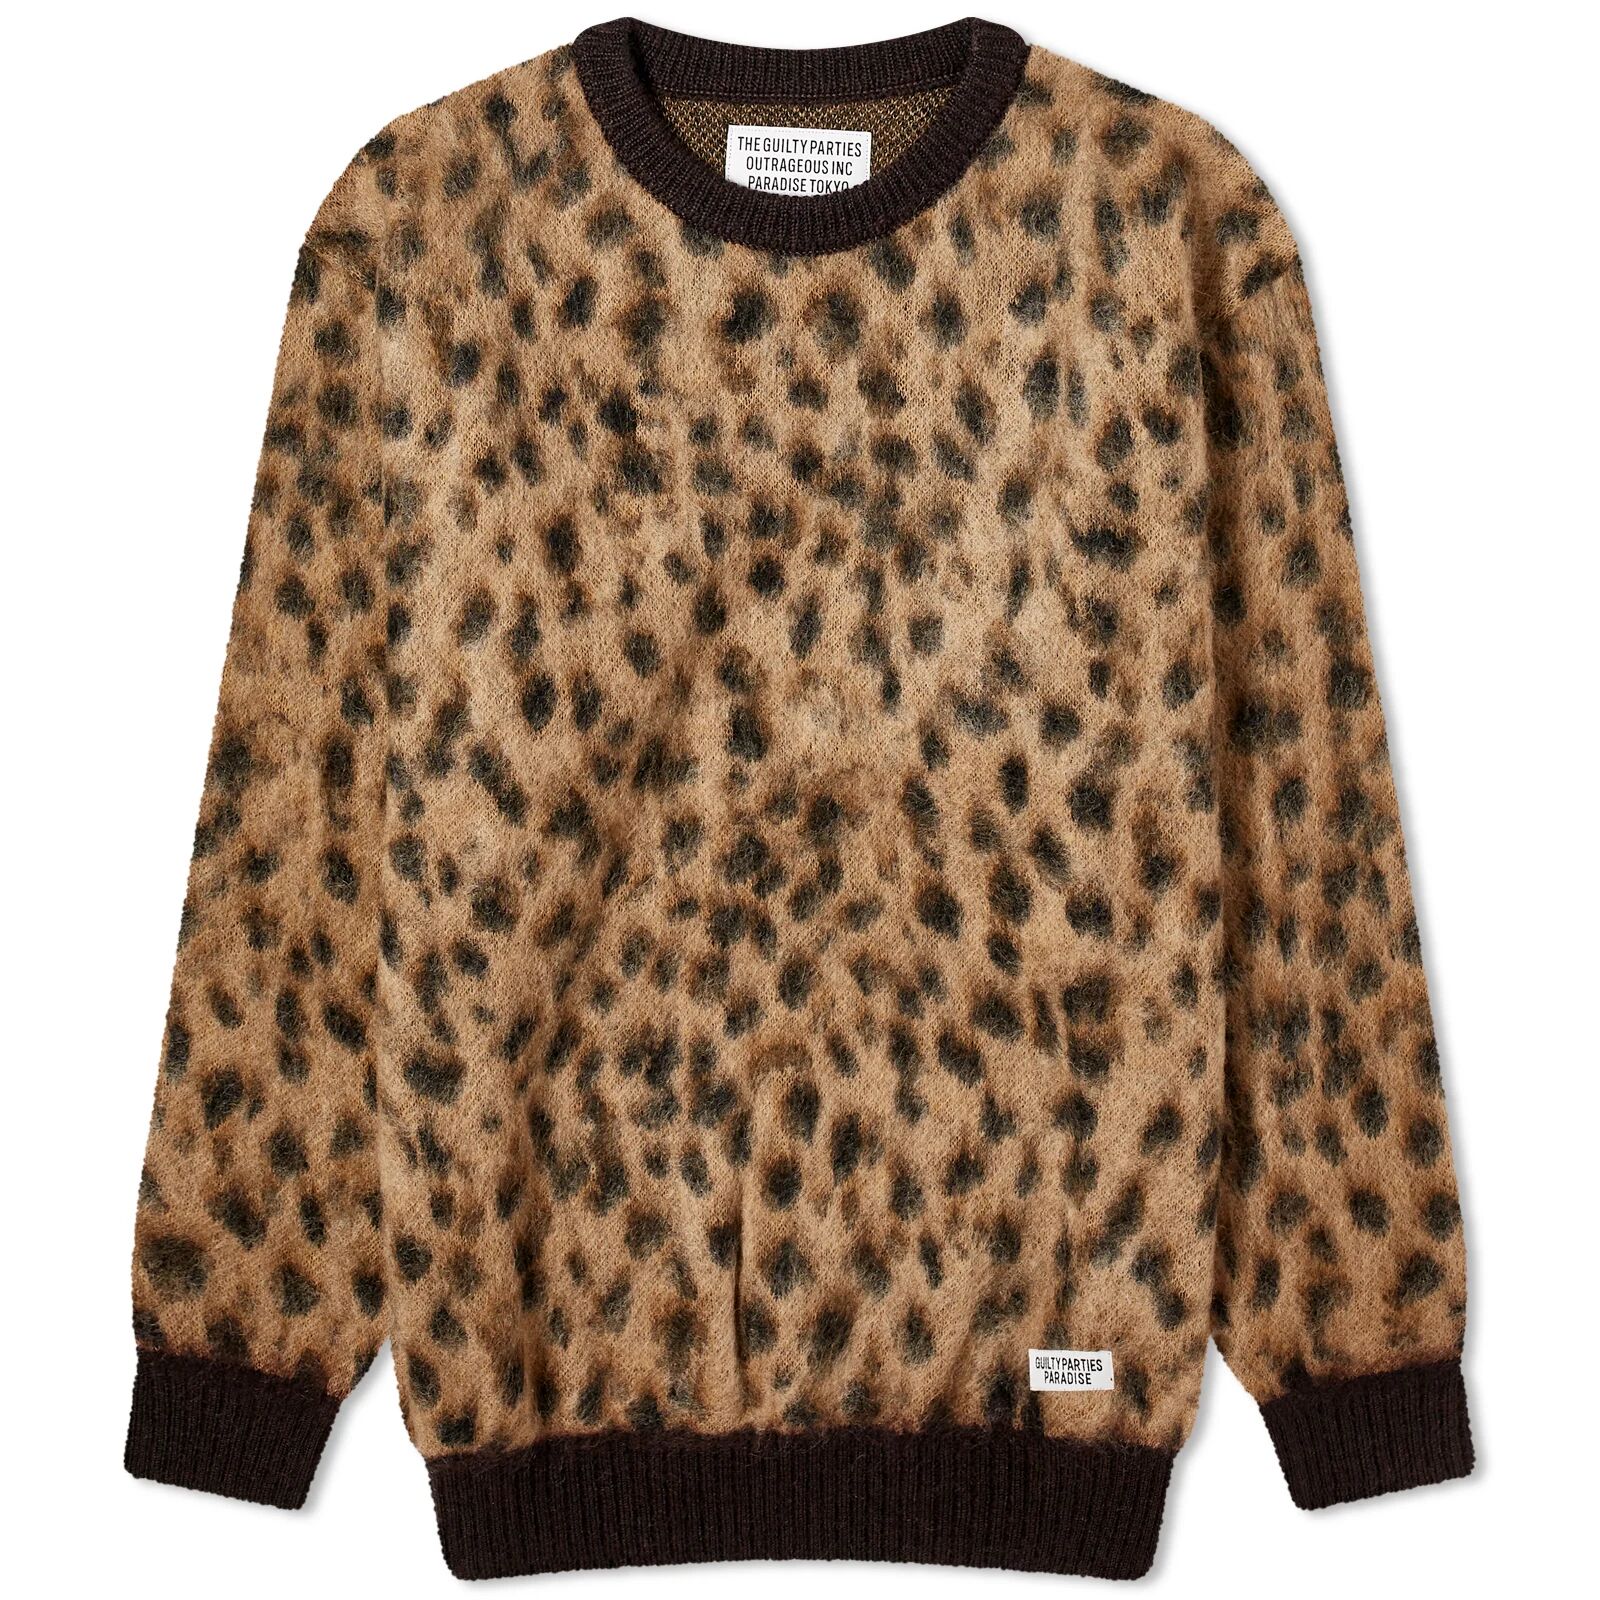 Wacko Maria Men's Leopard Mohair Knitted Jumper in Beige, Size X-Large